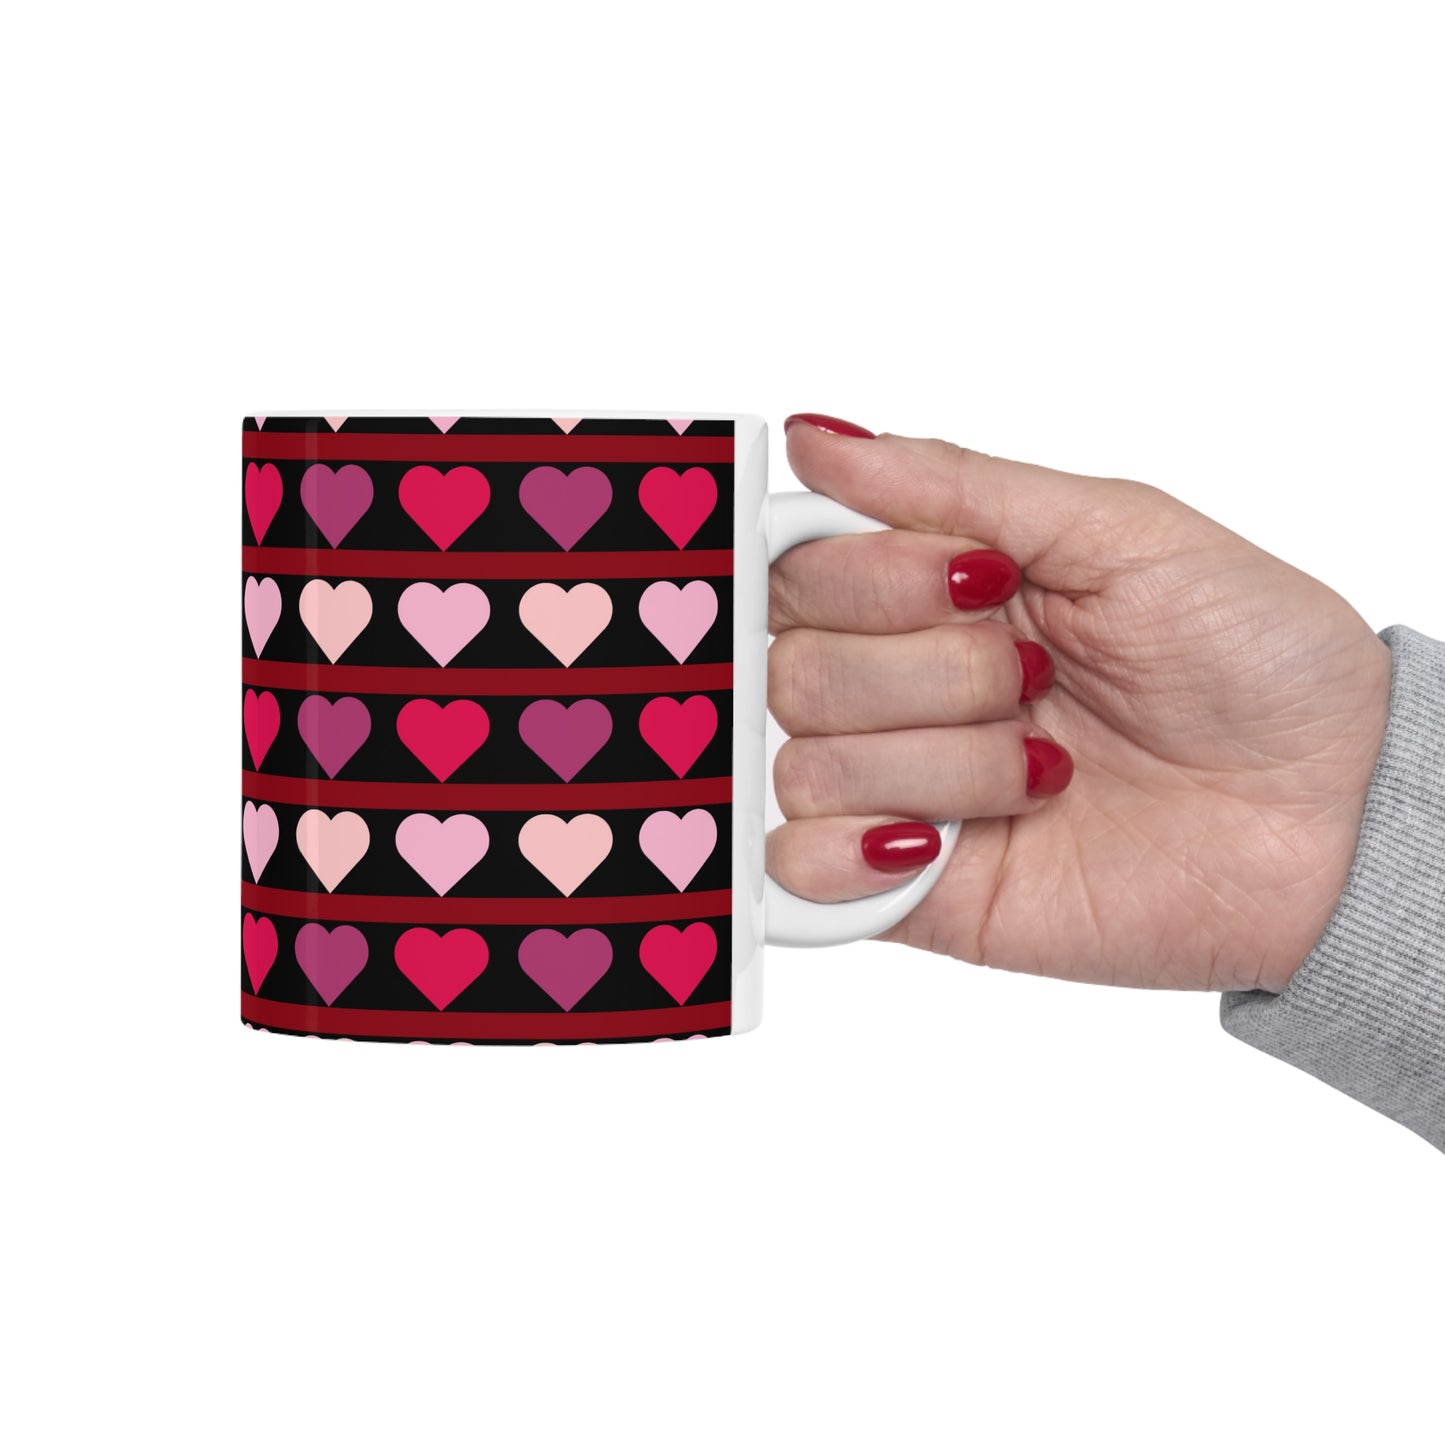 Hearts Ceramic Mug 11oz